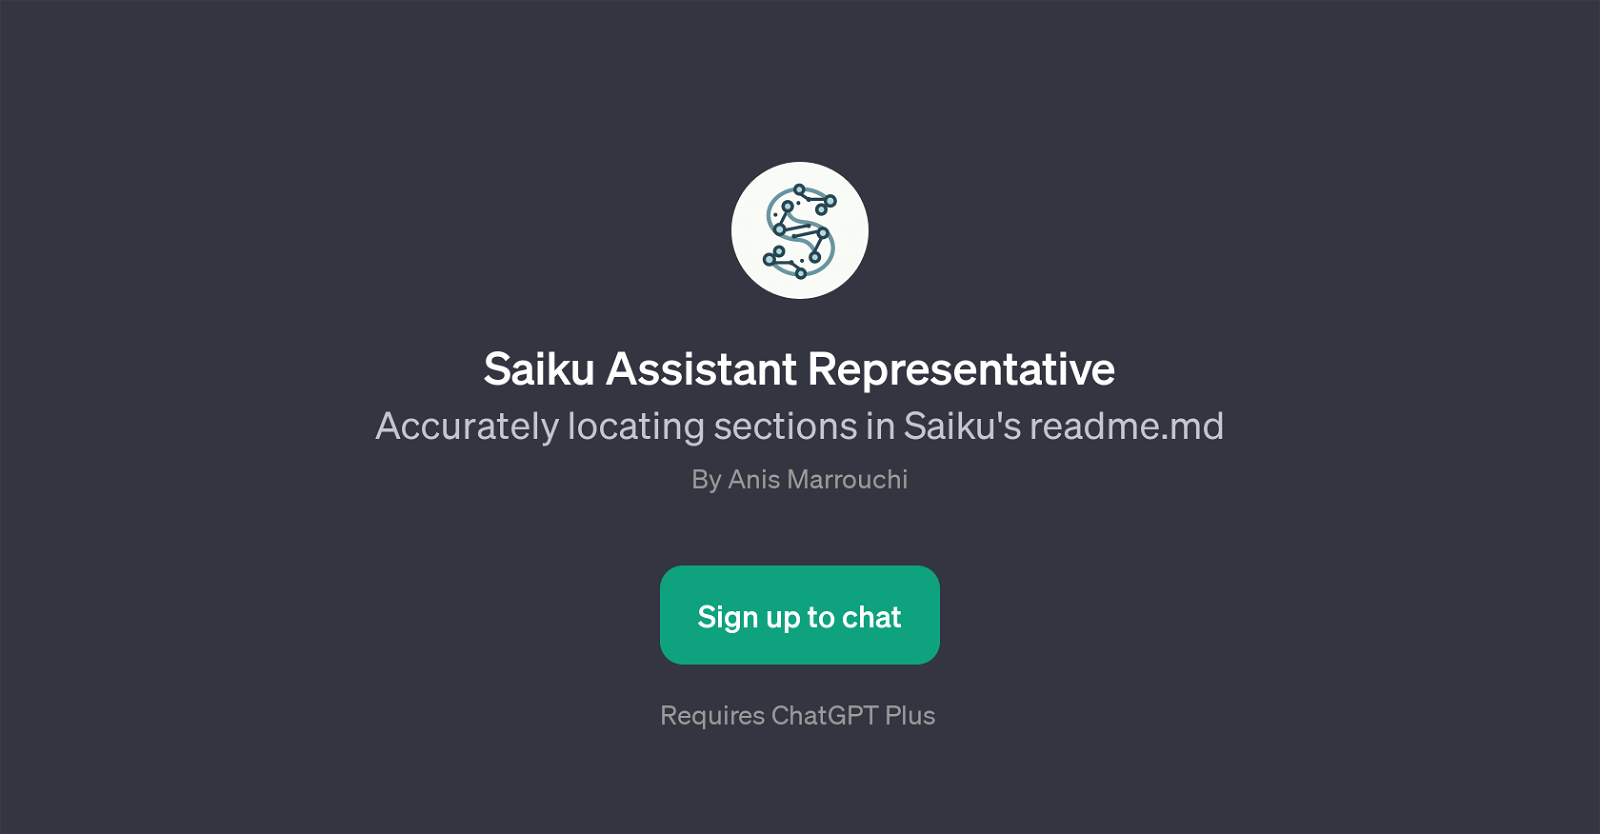 Saiku Assistant Representative website